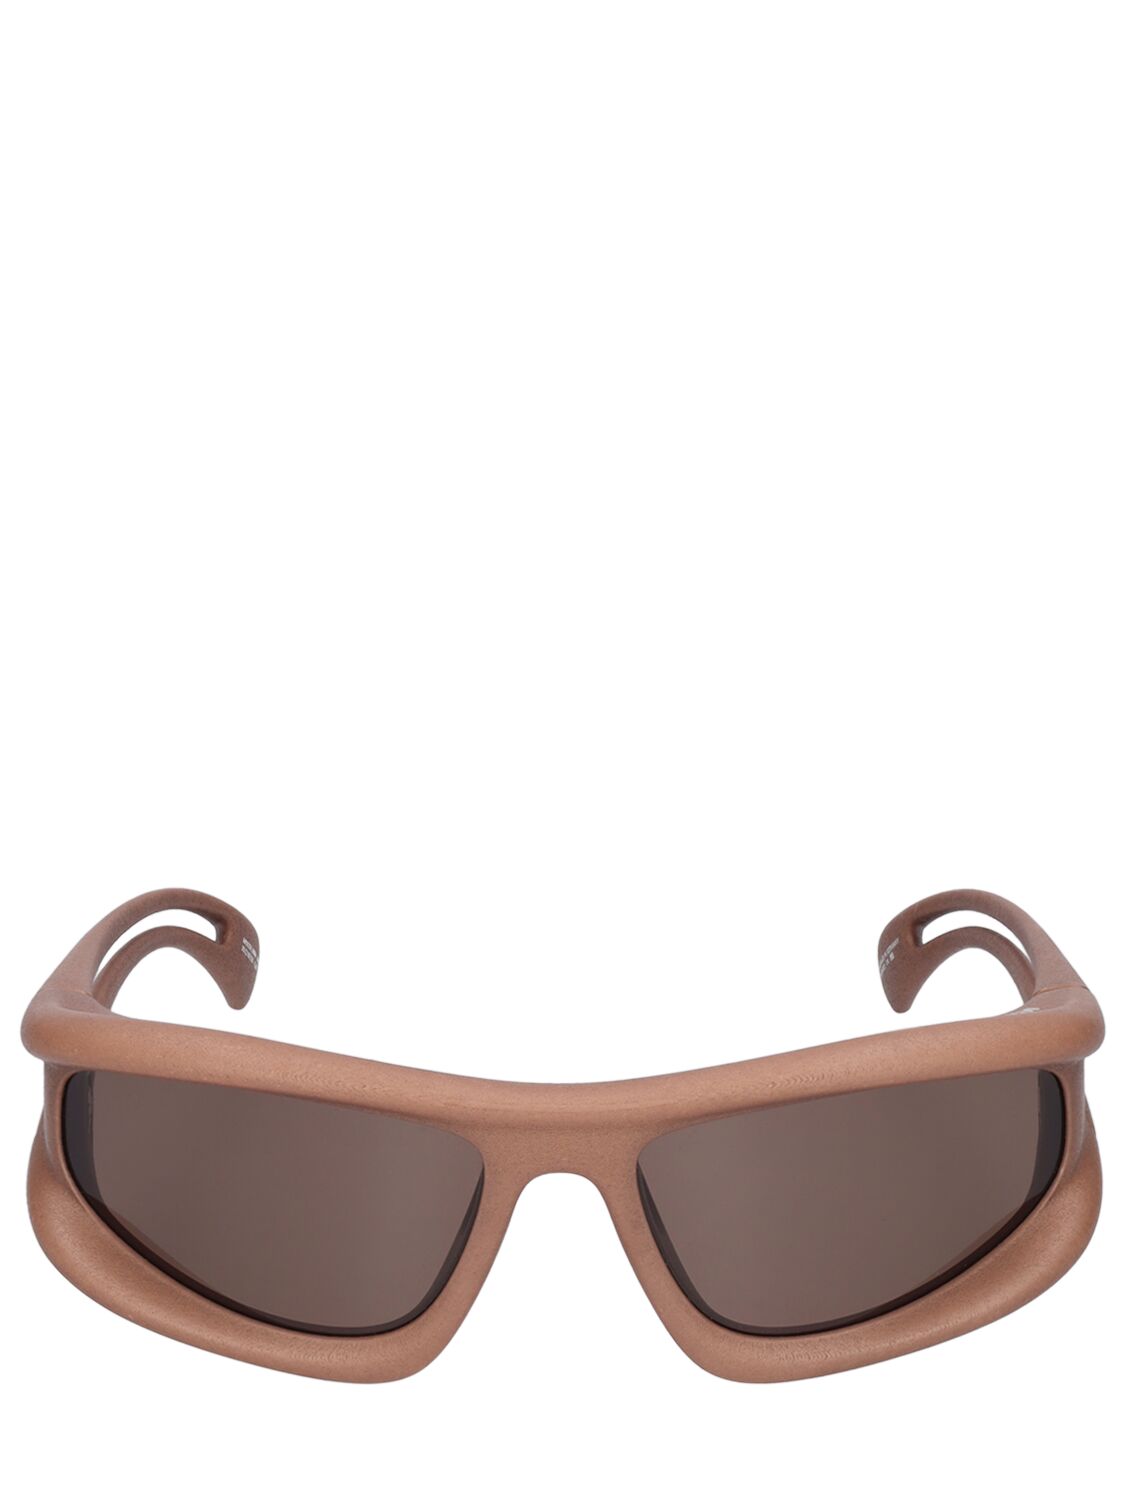 Mykita Marfa 032c Sunglasses In Brown